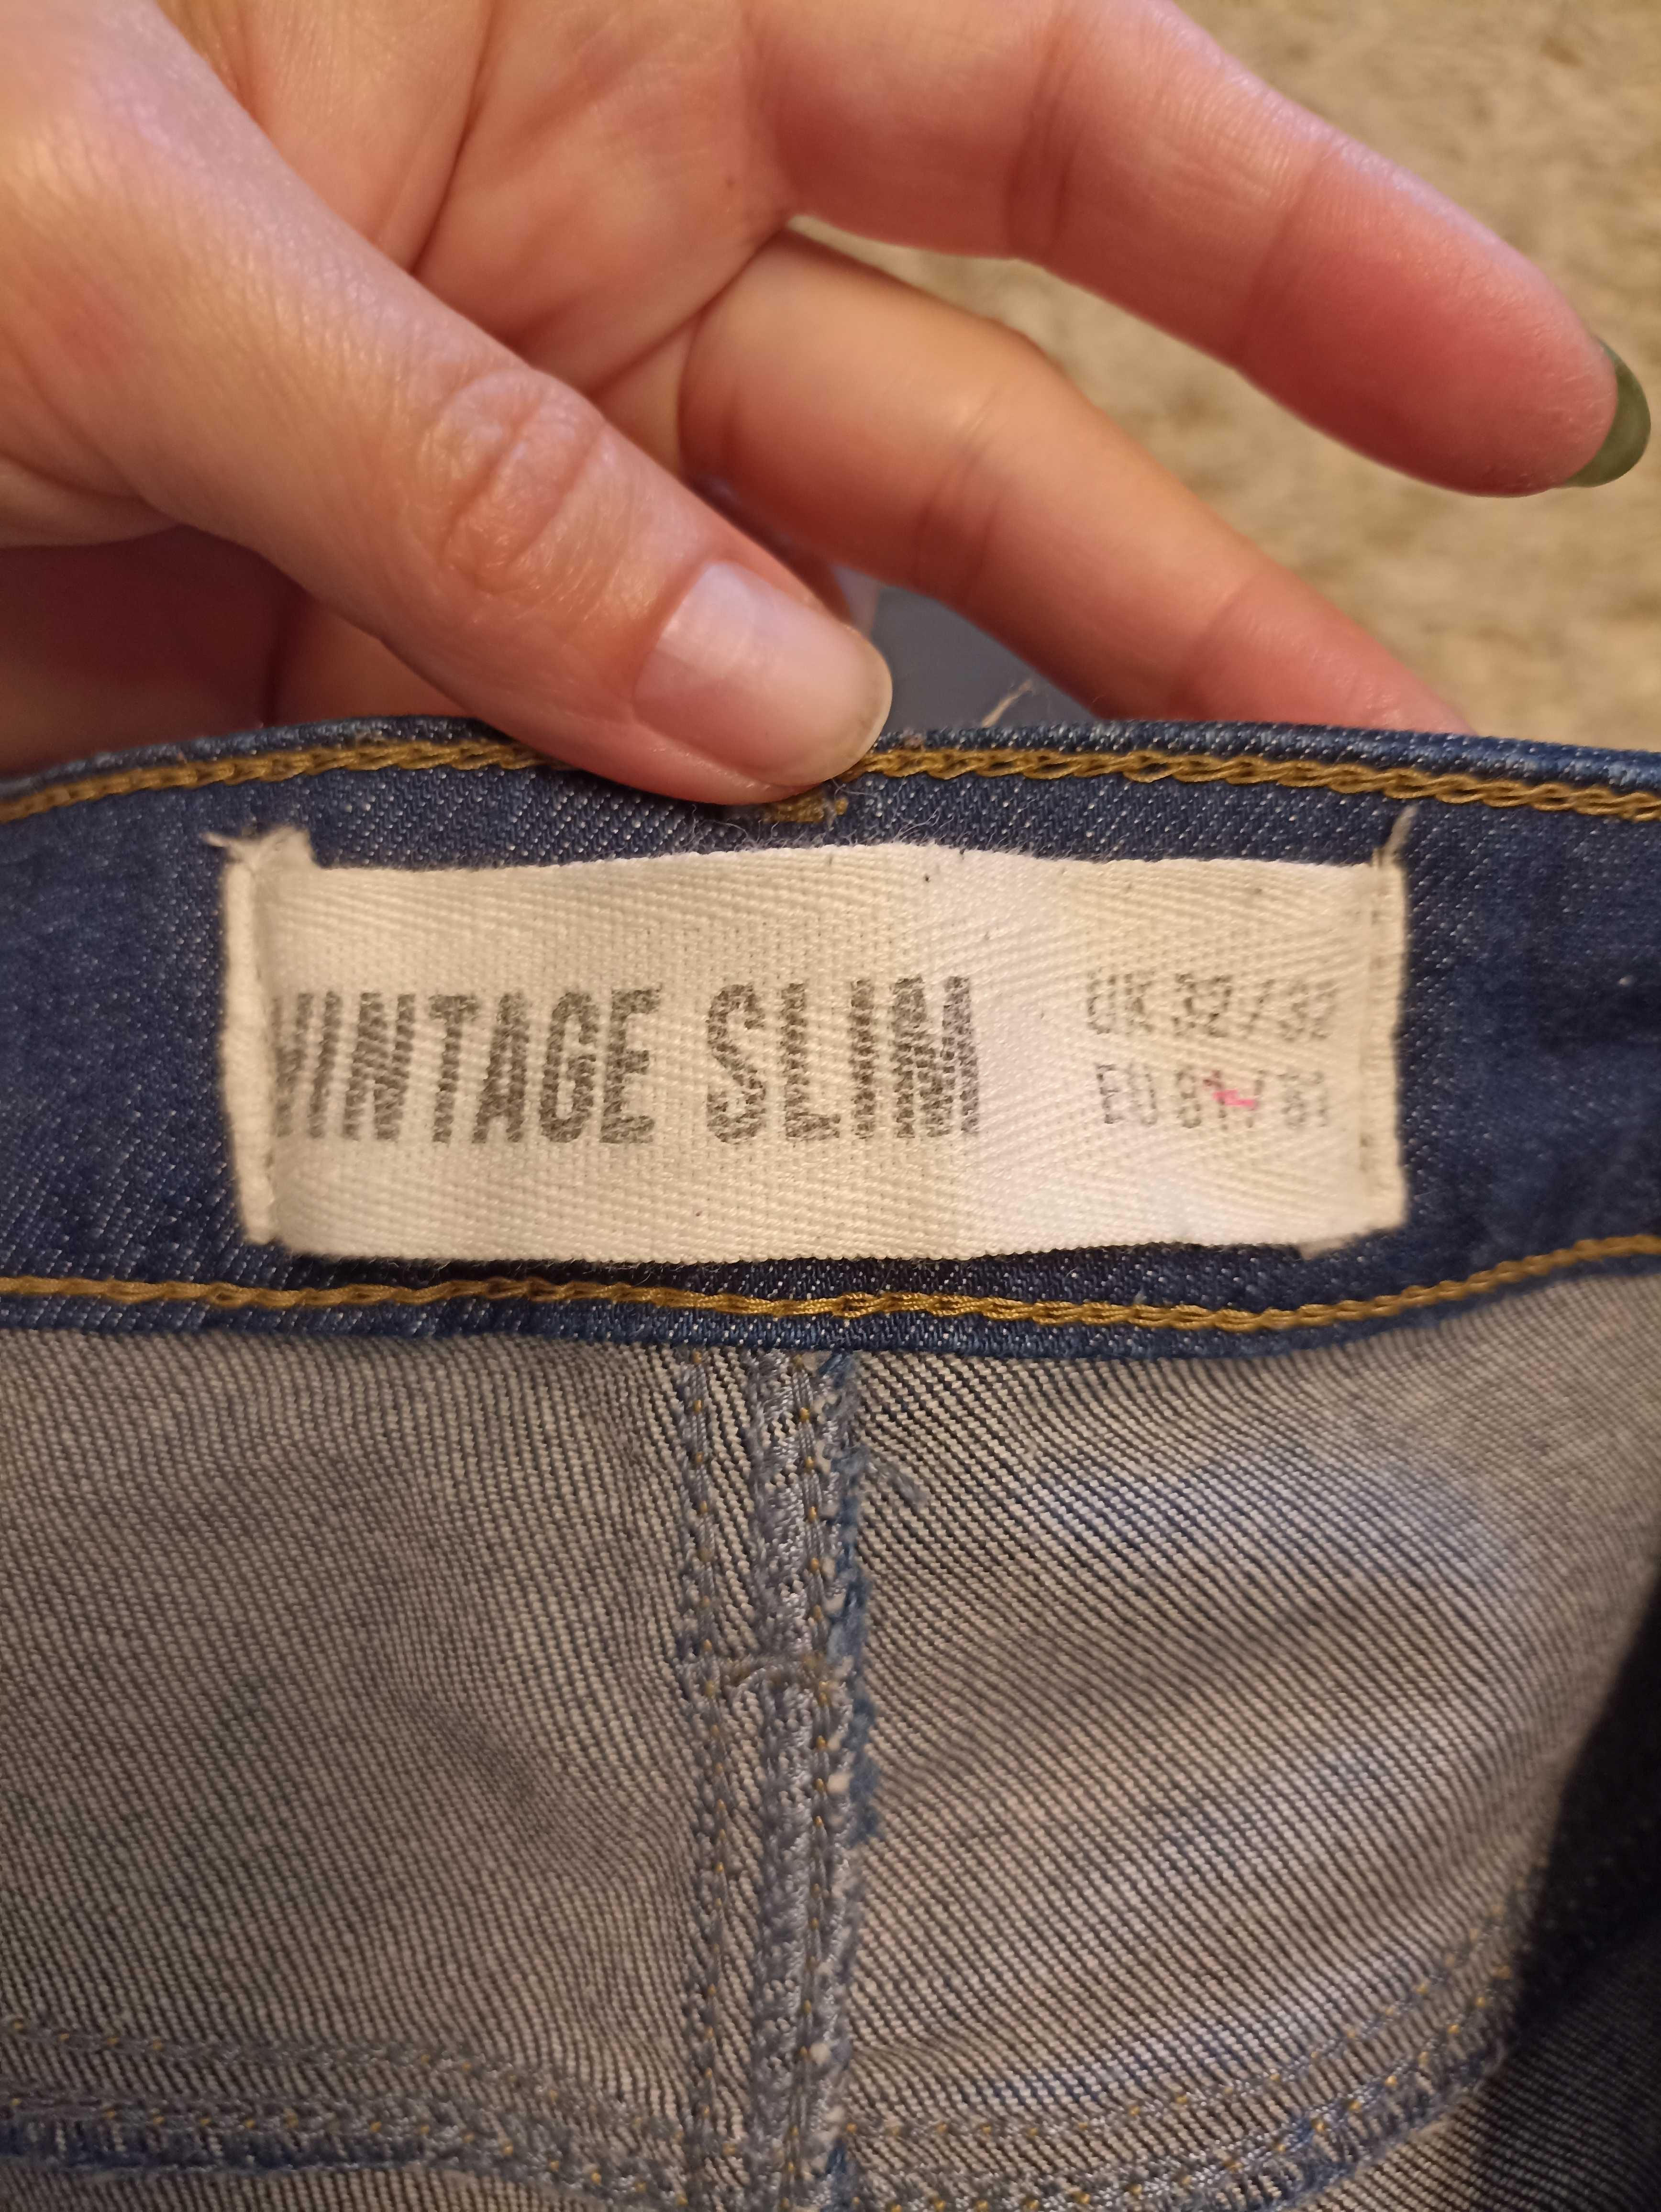 Джинсовые шорты Vintage slime, New look джинсові шорти.